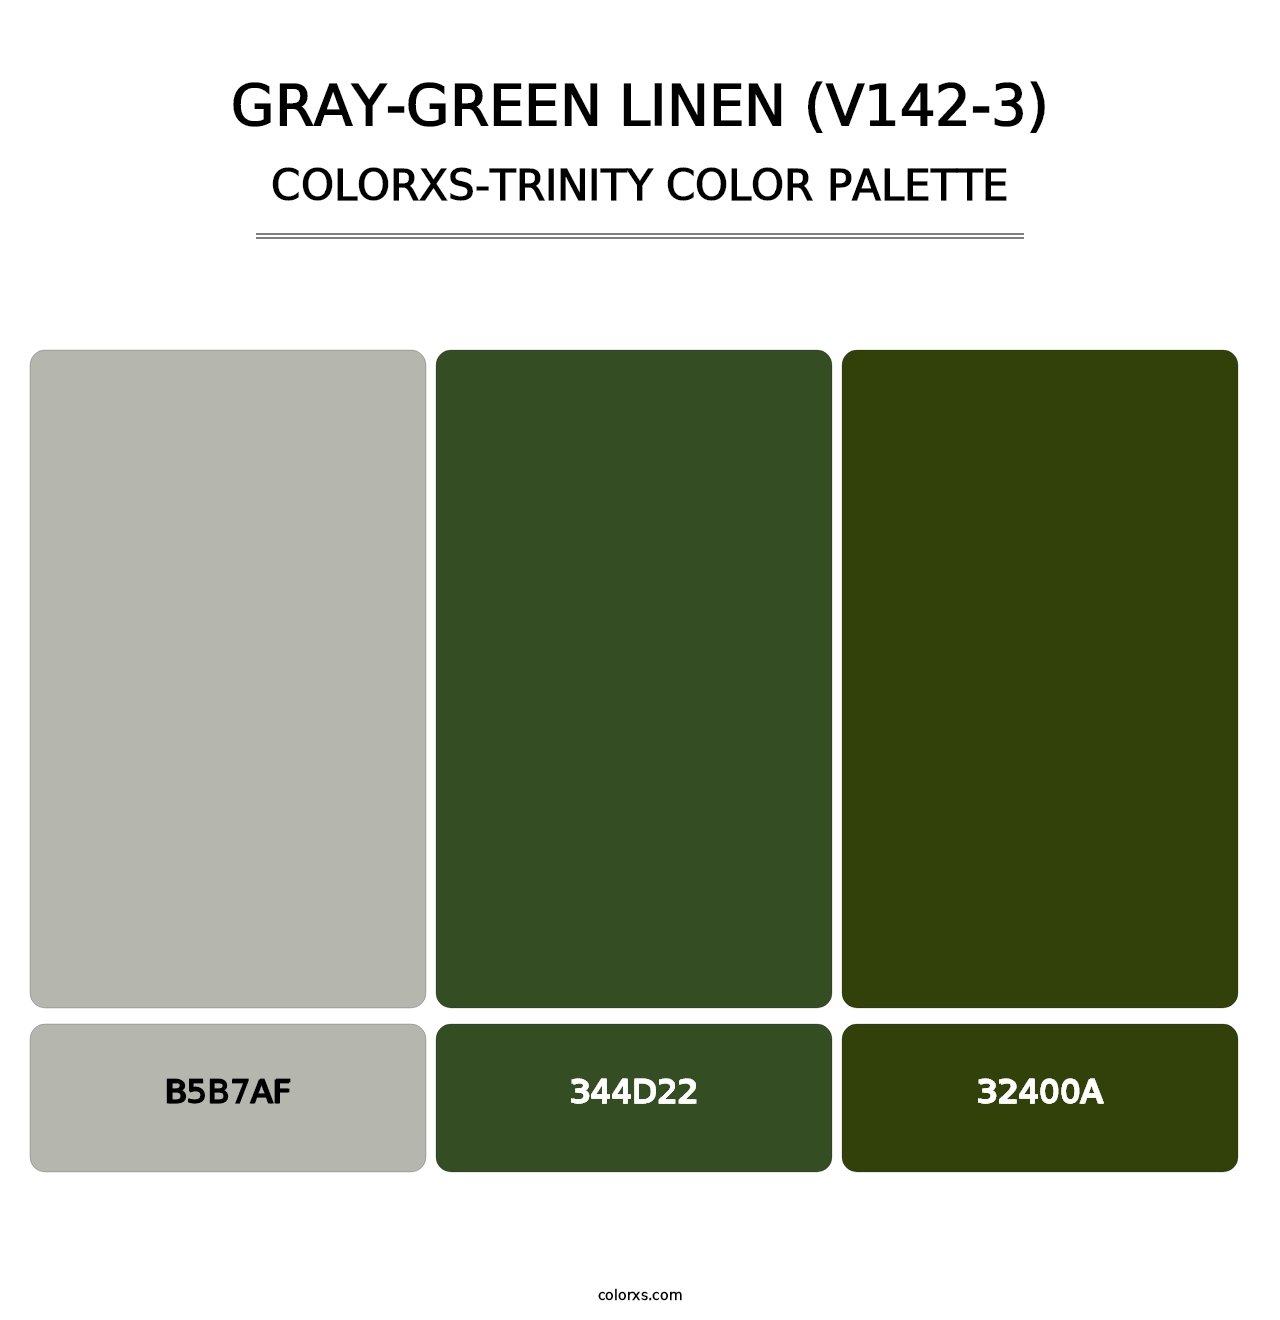 Gray-Green Linen (V142-3) - Colorxs Trinity Palette